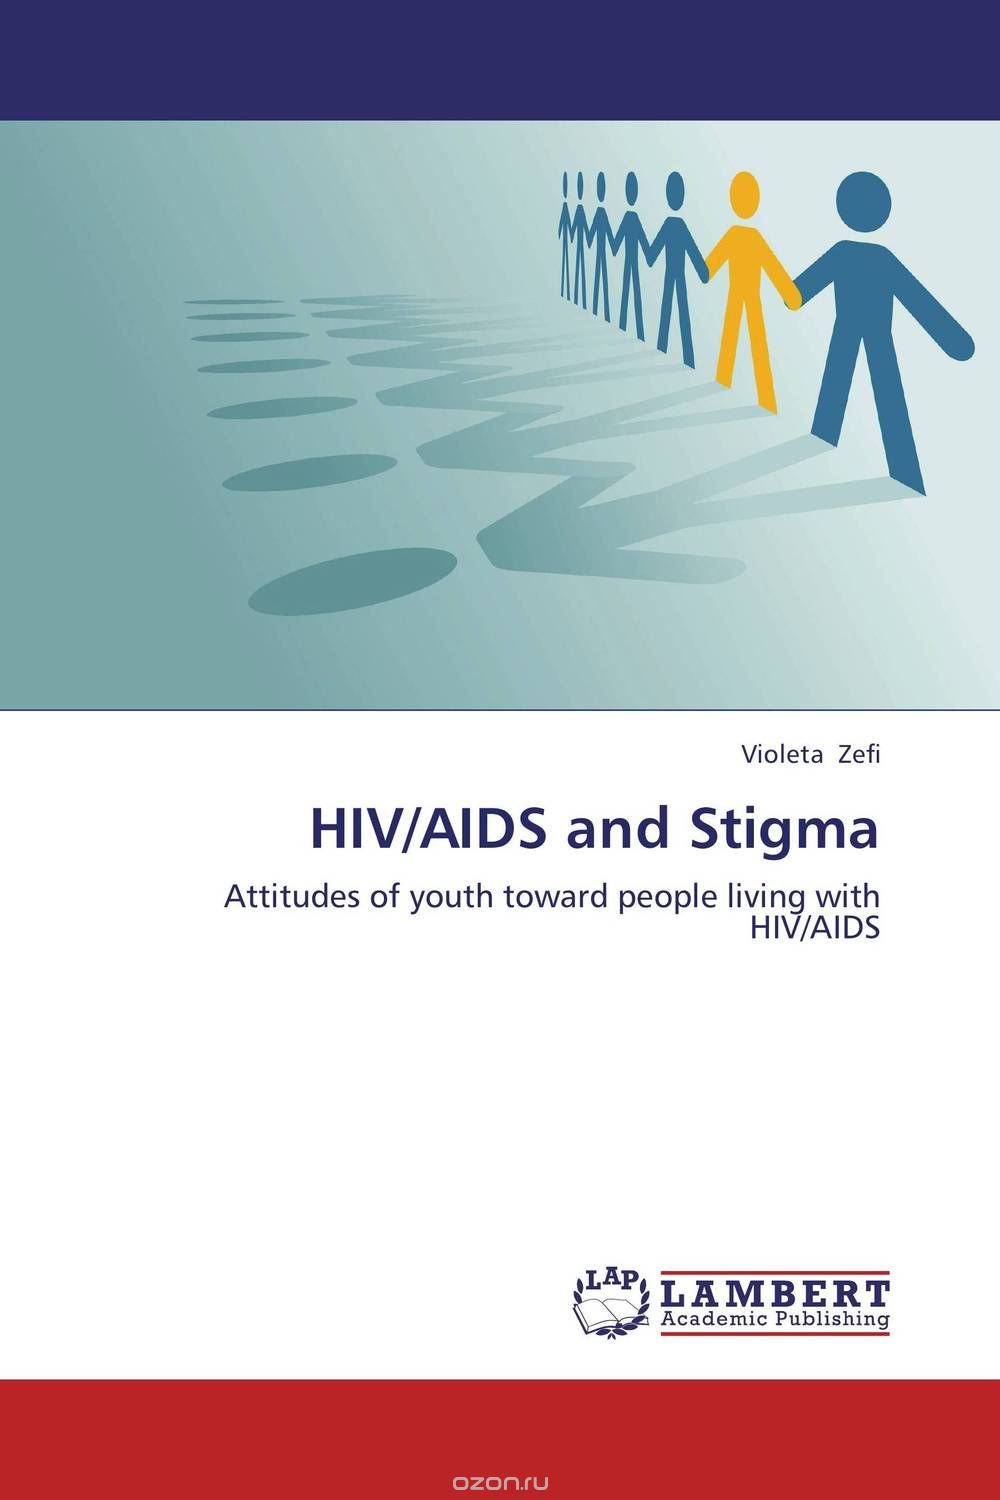 Скачать книгу "HIV/AIDS and Stigma"